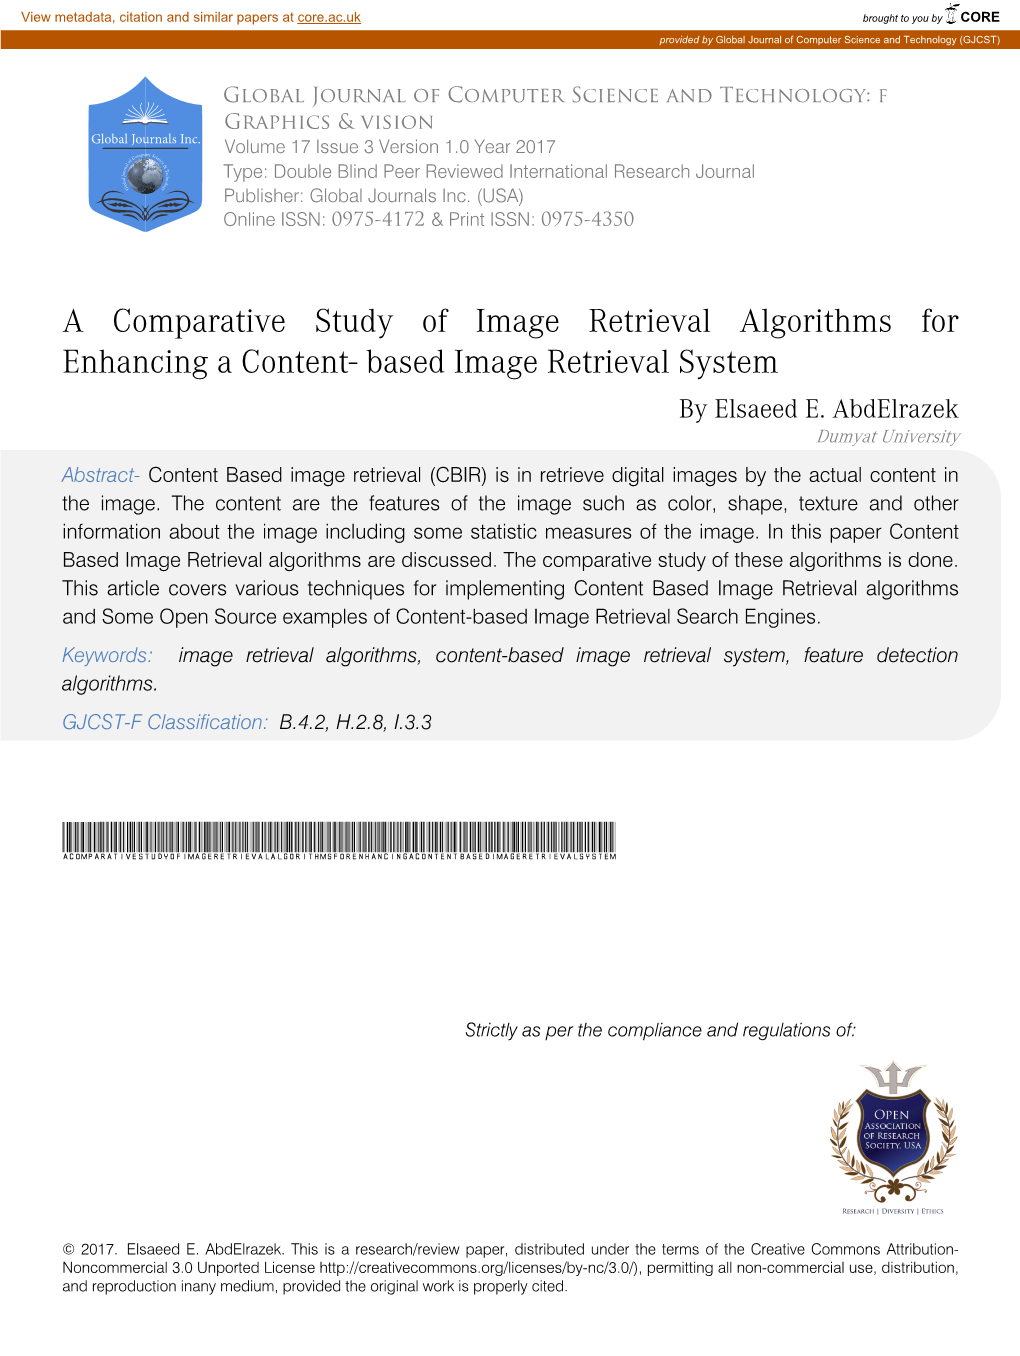 A Comparative Study of Image Retrieval Algorithms for Enhancing a Content- Based Image Retrieval System by Elsaeed E